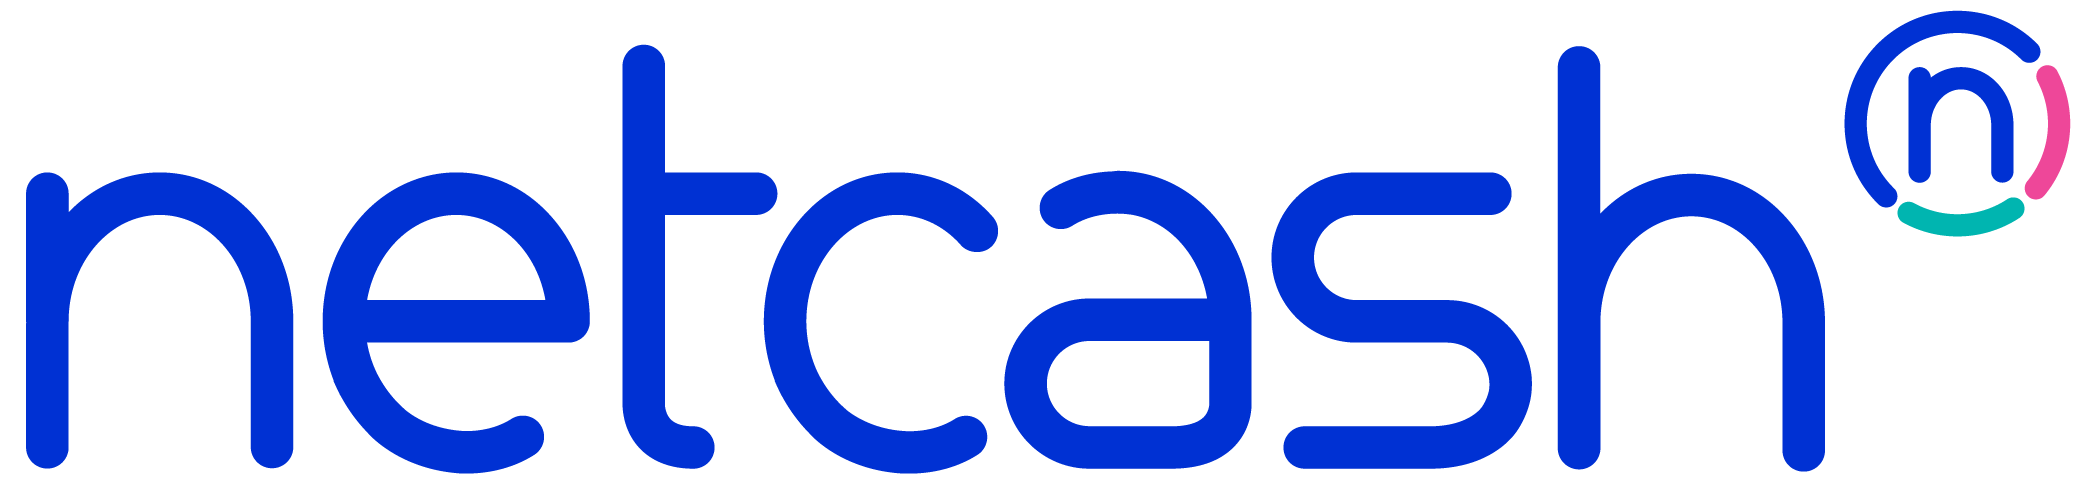 Netcash logo